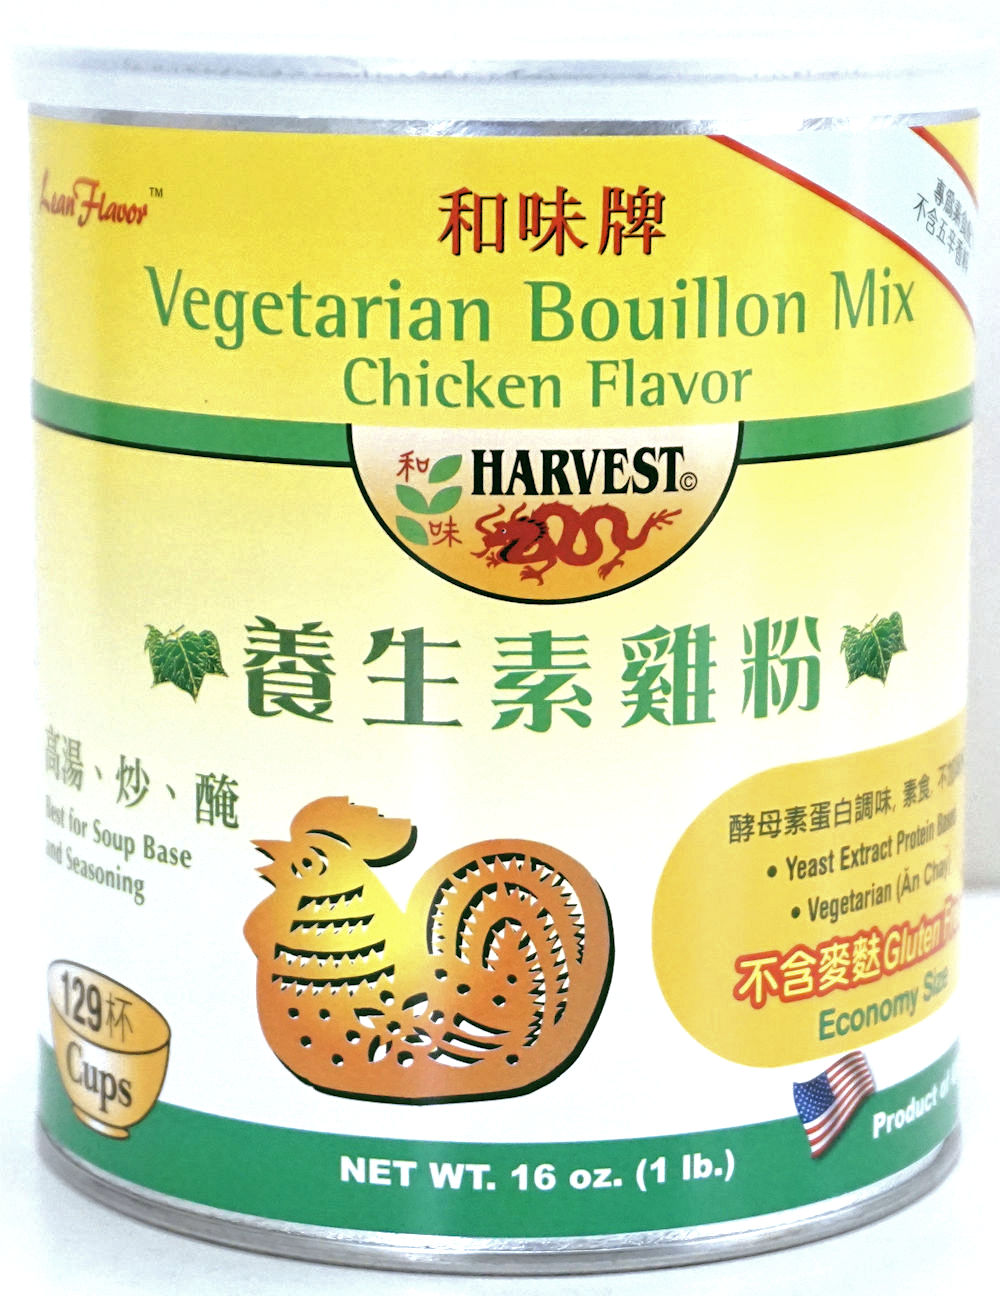 Harvest 2000 Vegetarian Bouillon Mix Chicken Flavor 素食调味料 素鸡粉